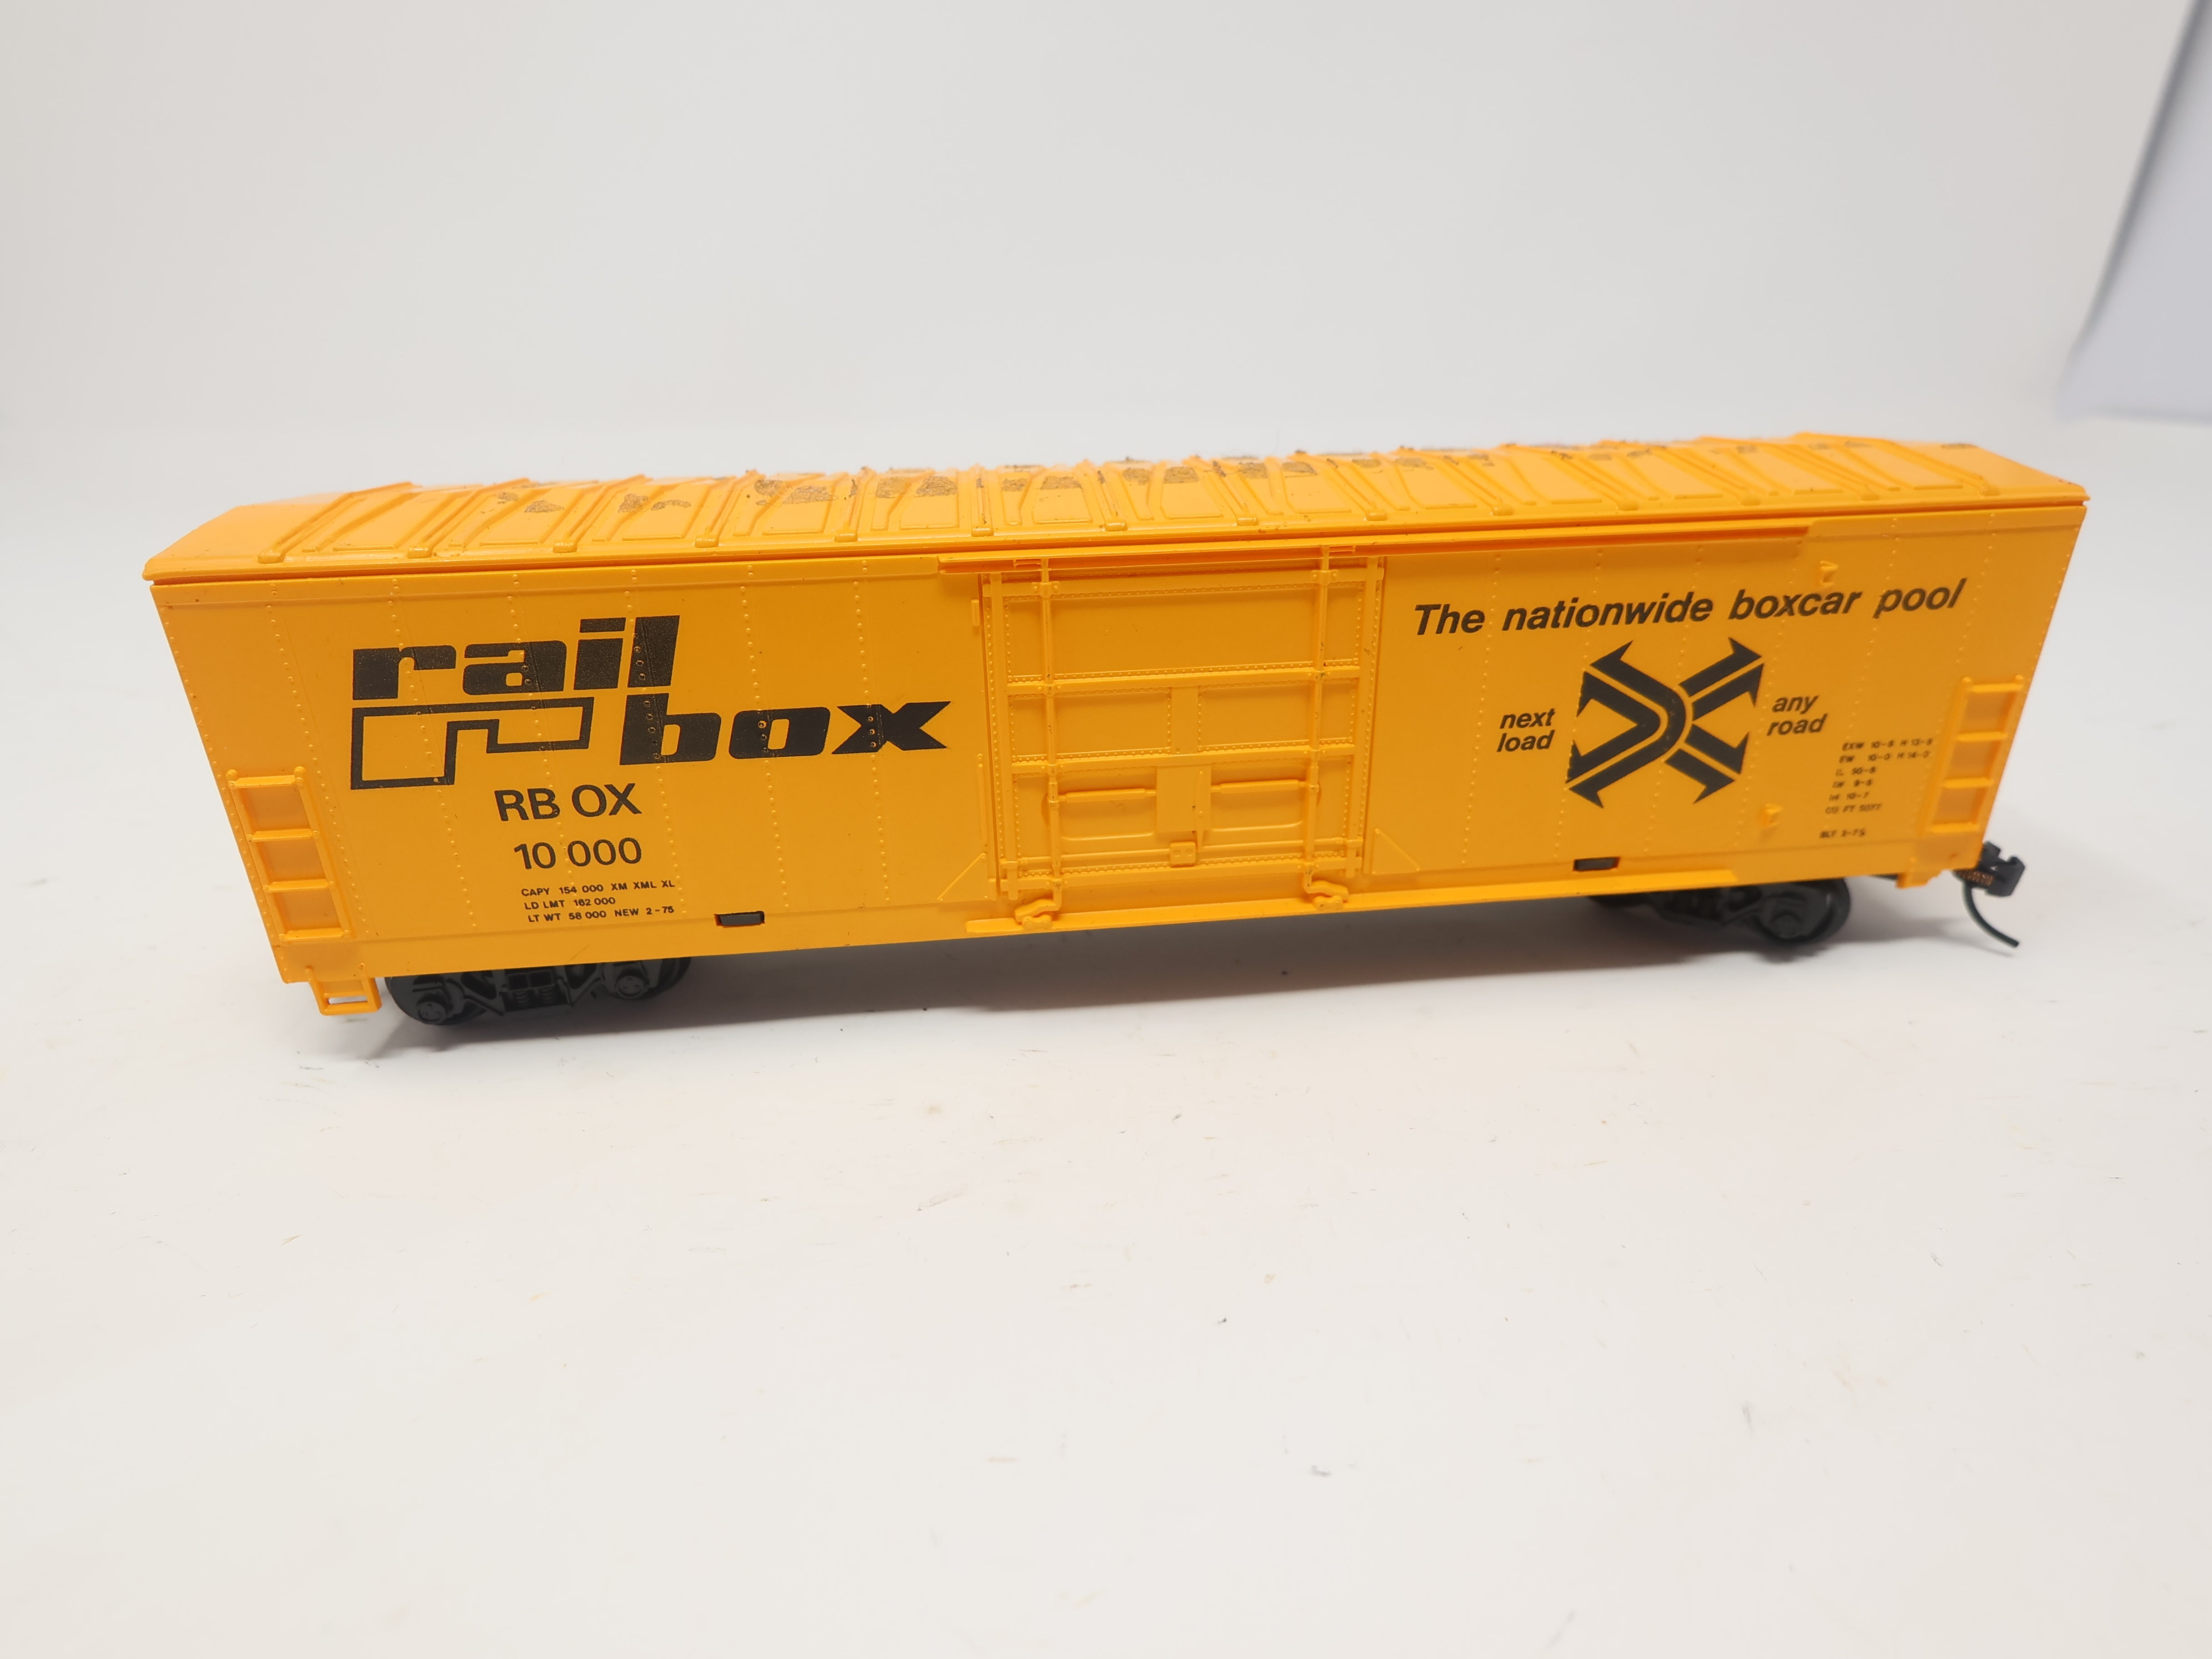 USED HO Scale, 50' Box Car, Rail Box RBOX #10000